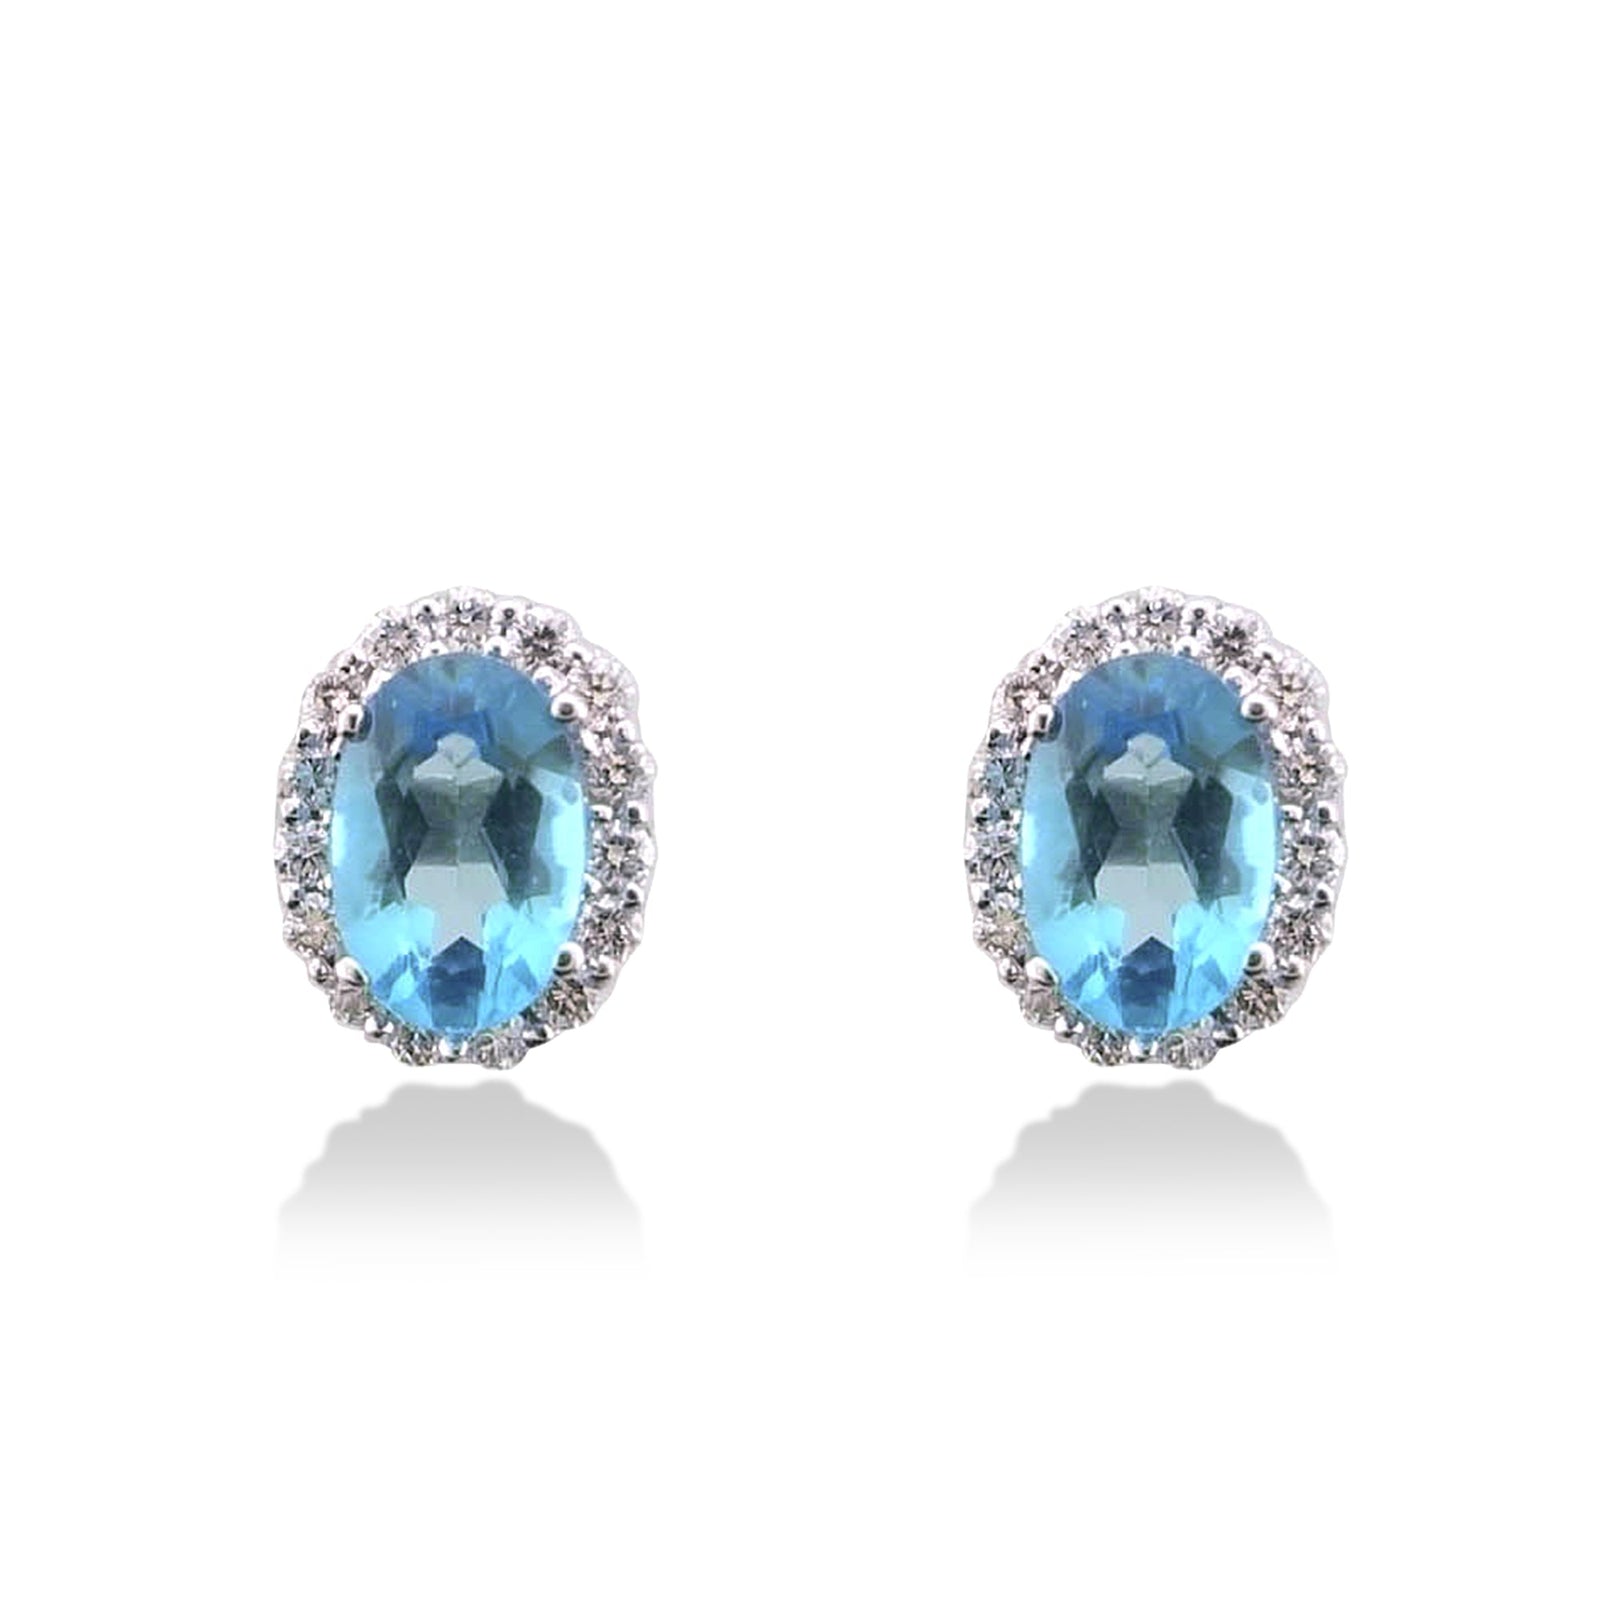 9ct white gold 5x4mm oval aquamarine & diamond cluster stud earrings 0.17ct